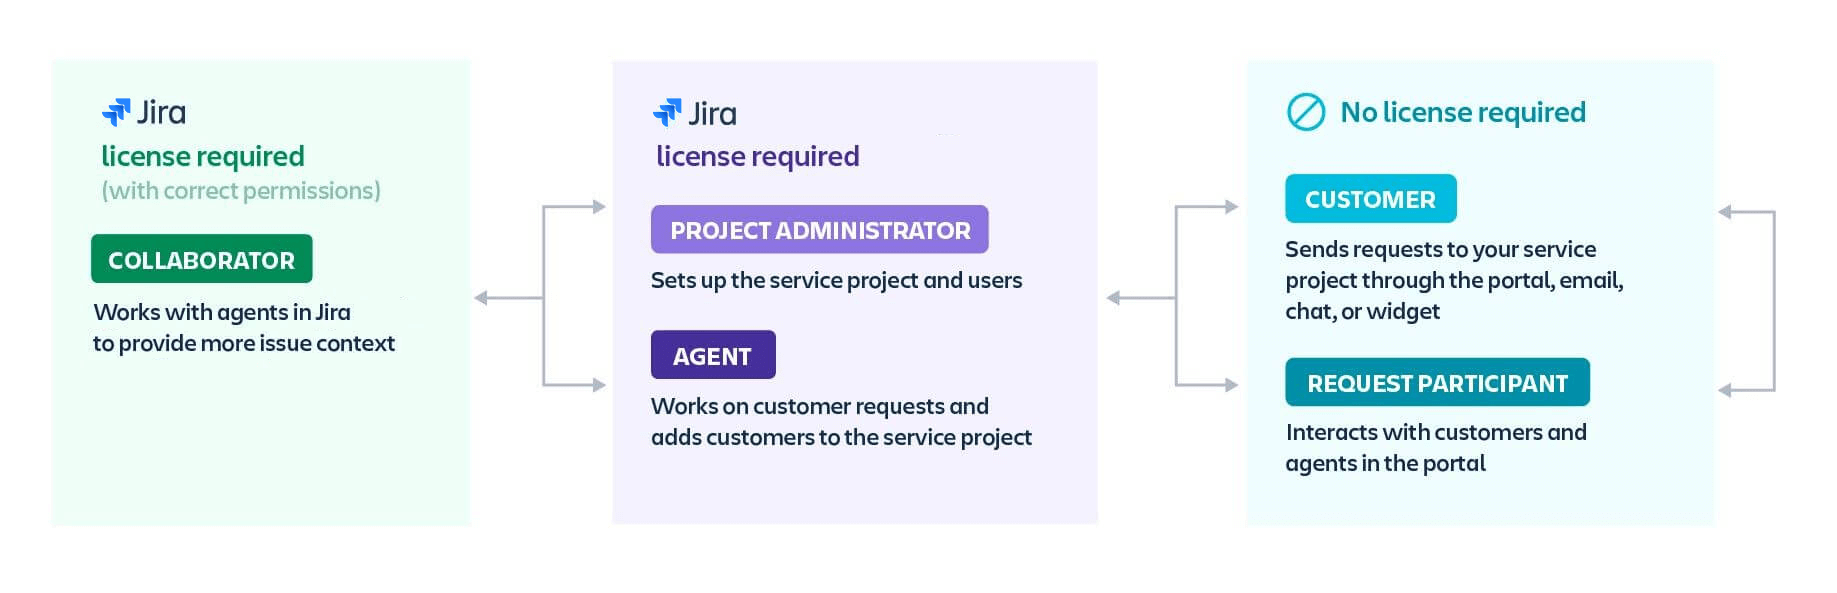 Jira Software 및 Jira Service Management의 사용자 유형: 공동 작업자, 프로젝트 관리자, 에이전트, 고객 및 요청 참가자